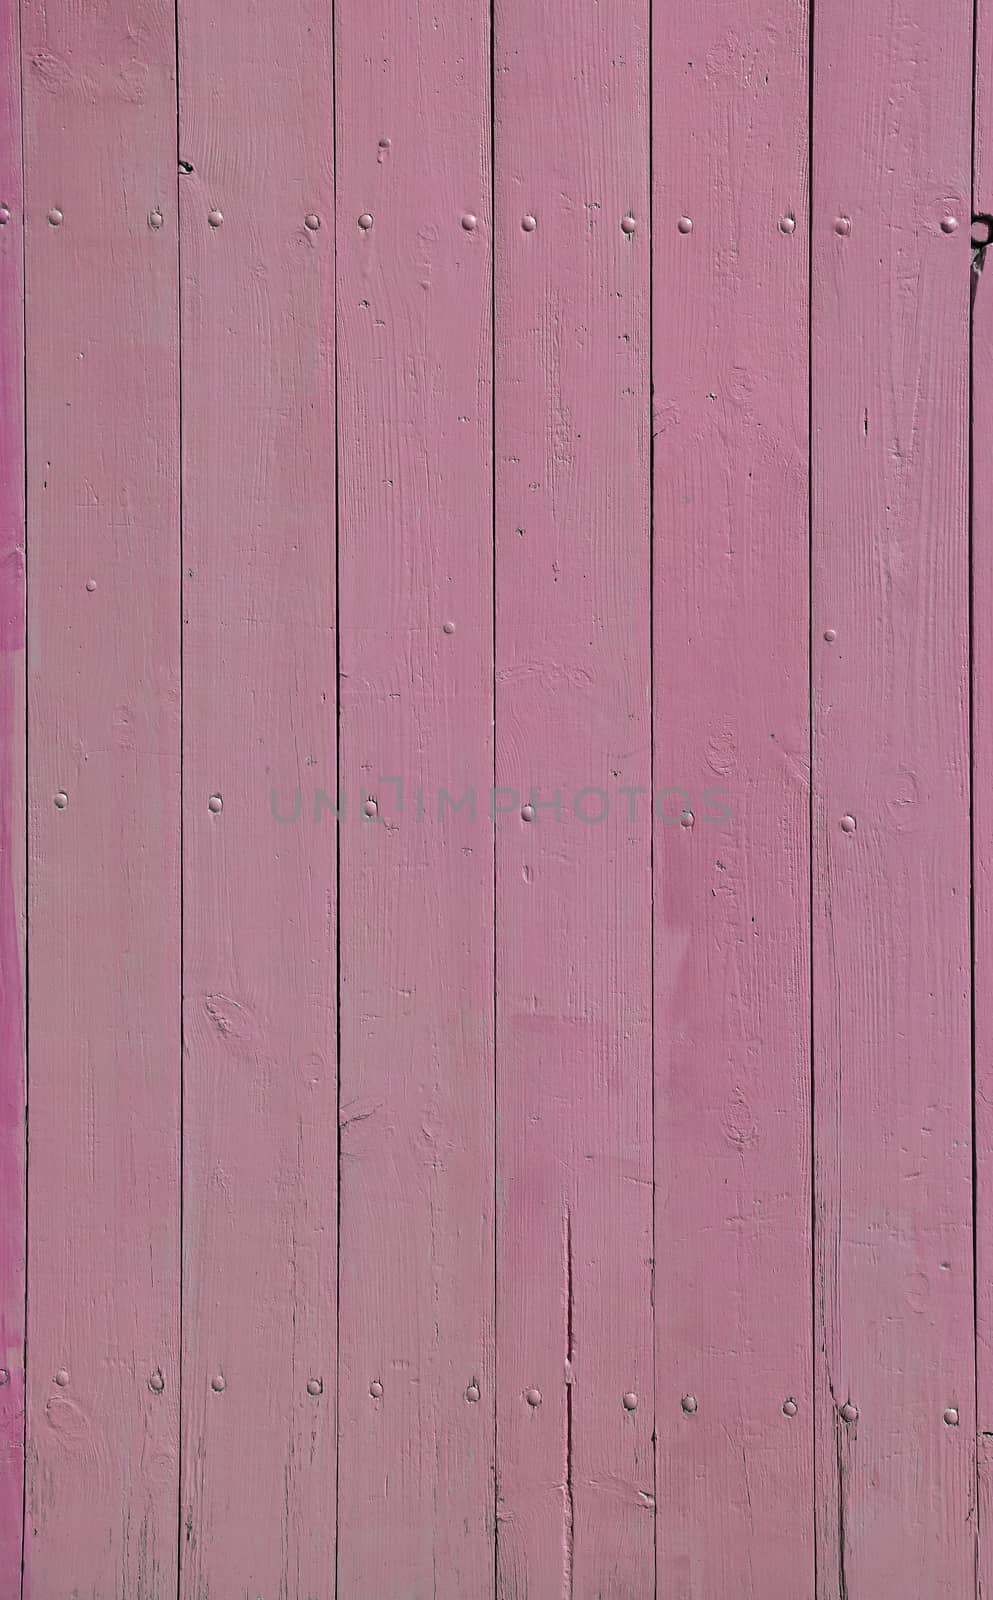 Pink vintage painted wooden panel background by BreakingTheWalls